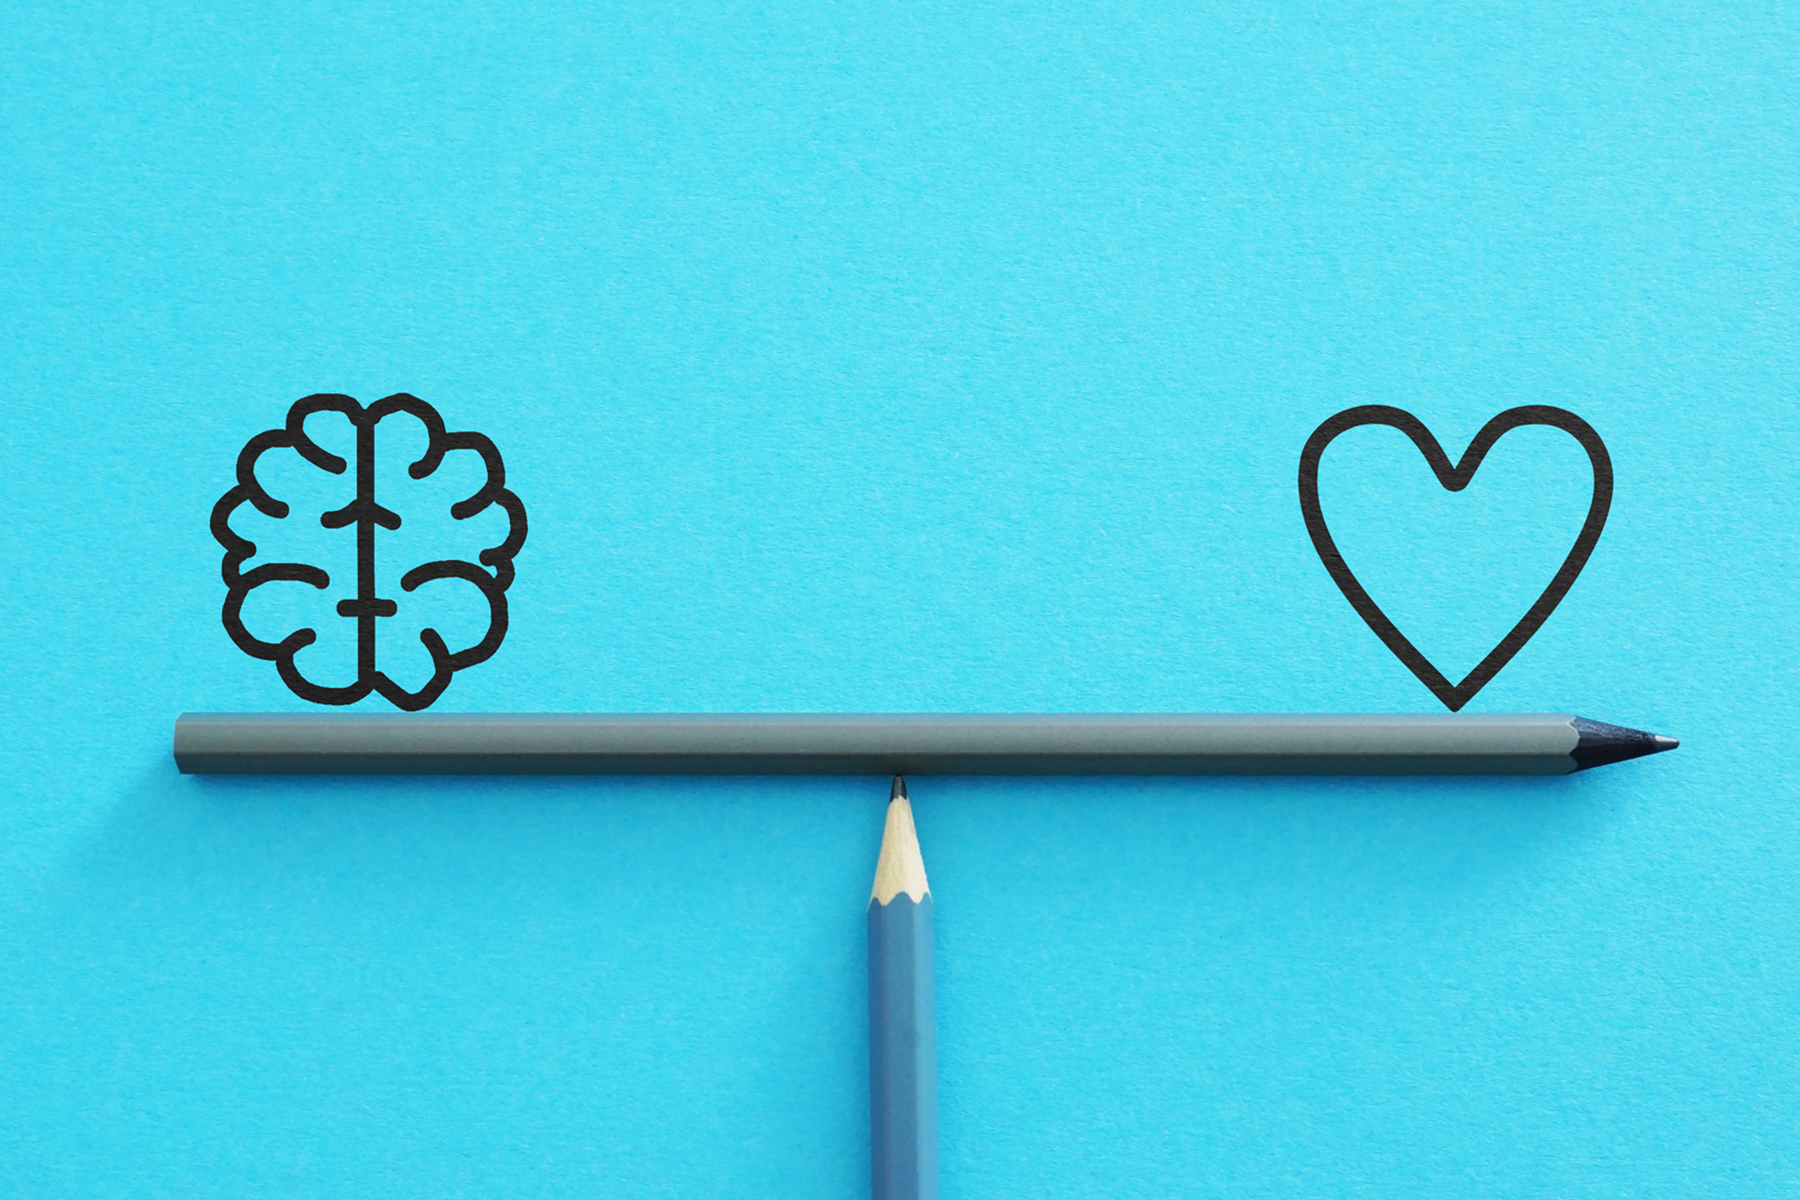 Pencils balancing a brain and a heart